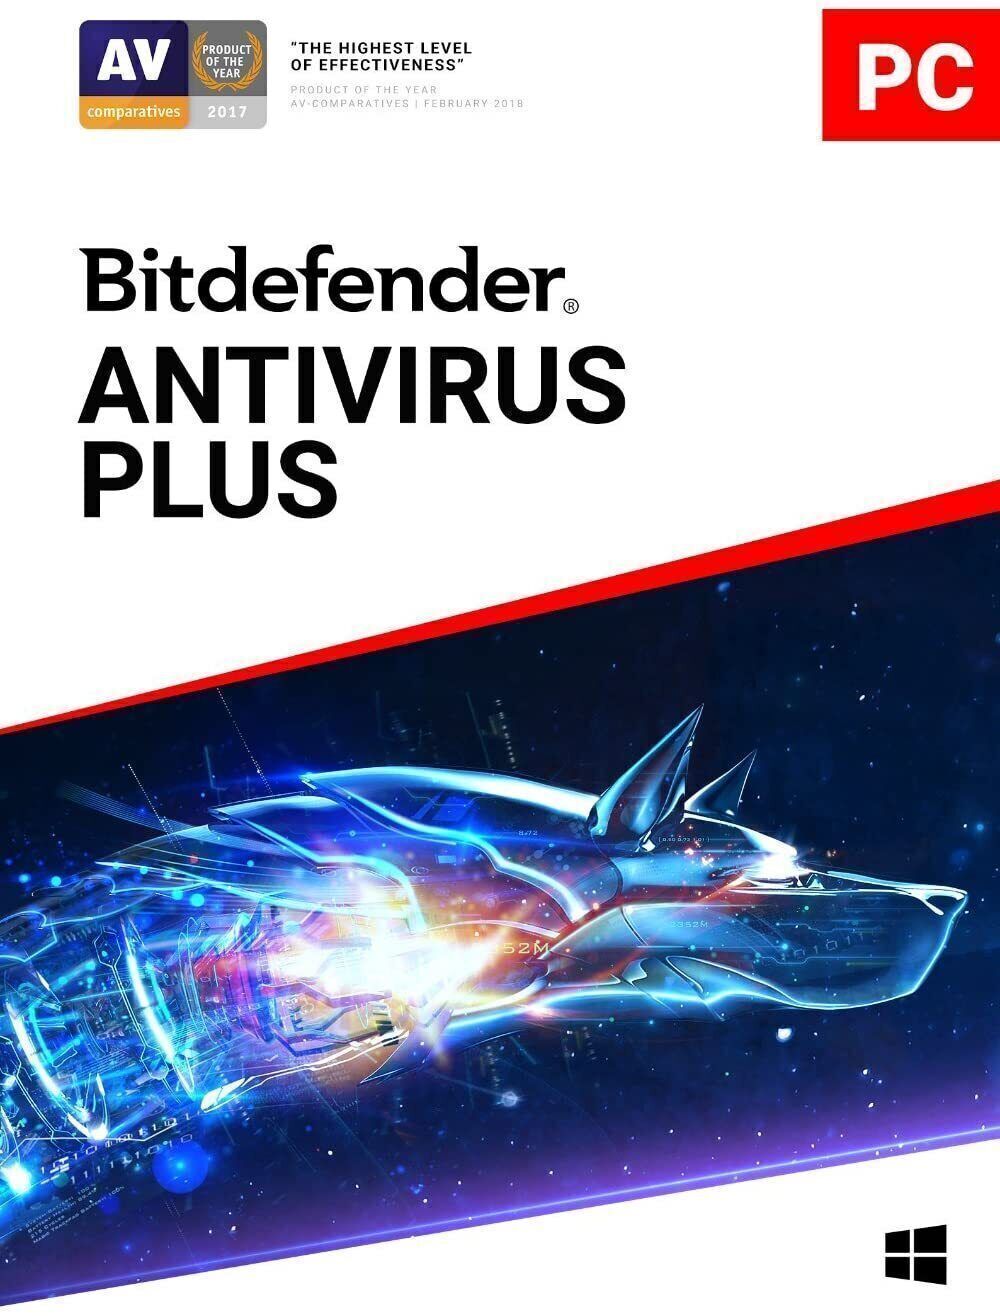 Bitdefender Antivirus Plus 3 Years 3 WINDOWS Devices Protection, Latest Version